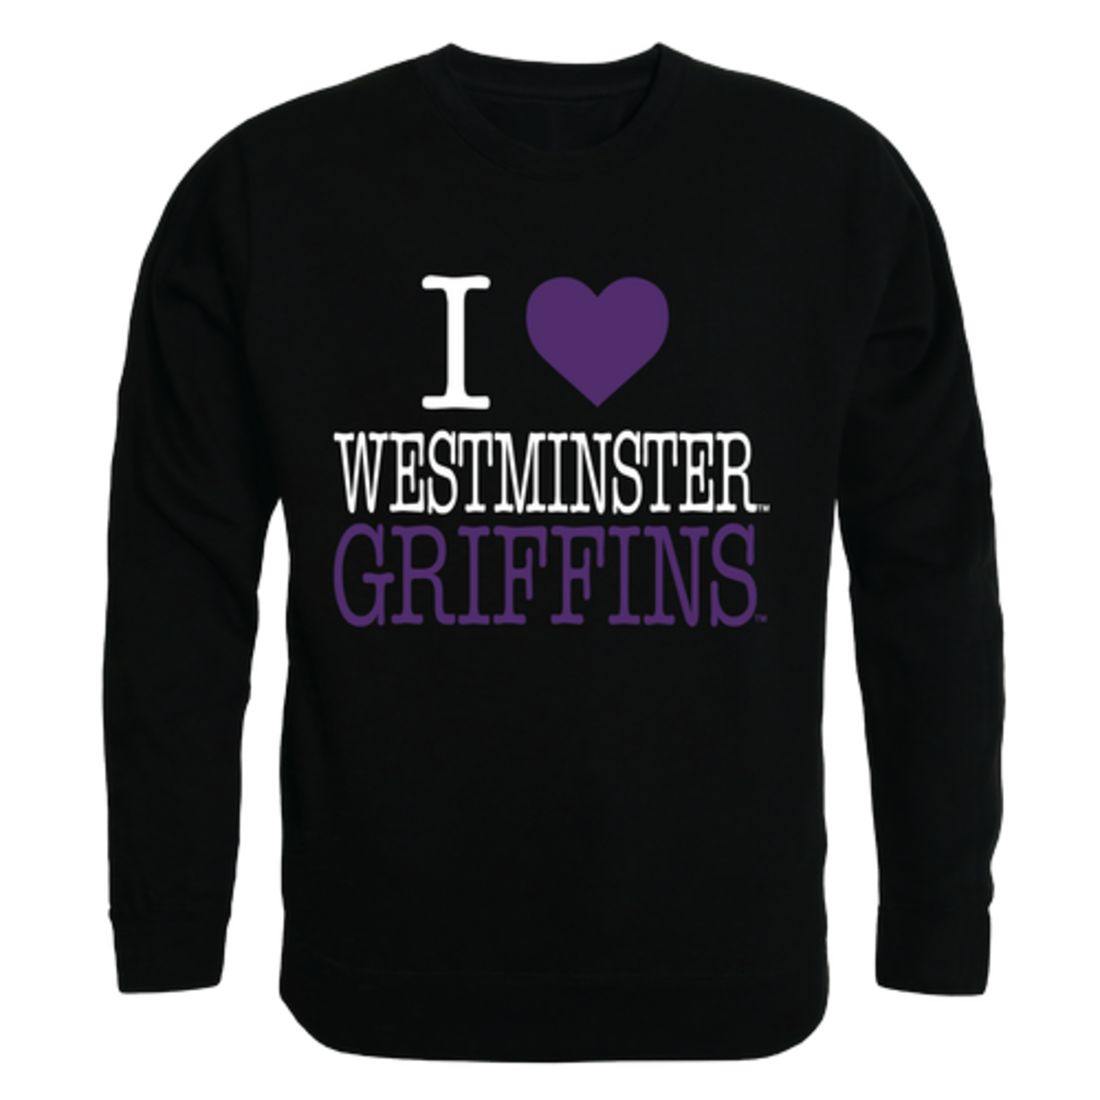 I Love Westminster College Griffins Crewneck Pullover Sweatshirt Sweater-Campus-Wardrobe